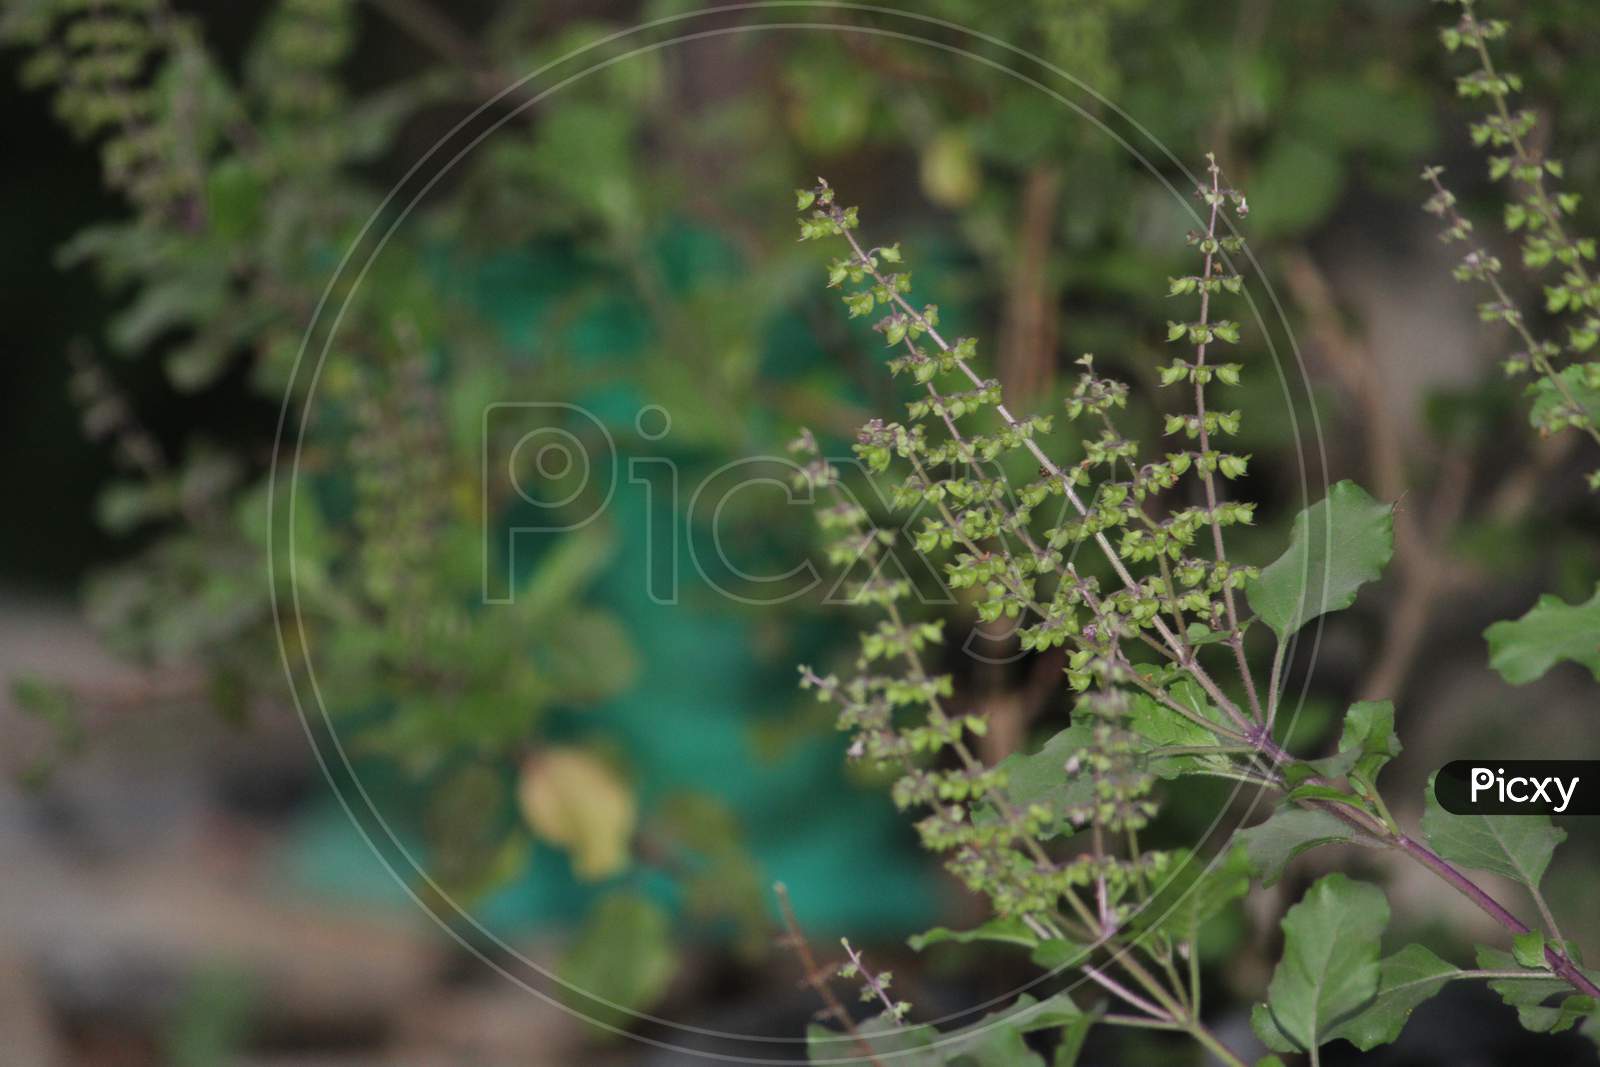 Tulsi seeds - the medicinal plant